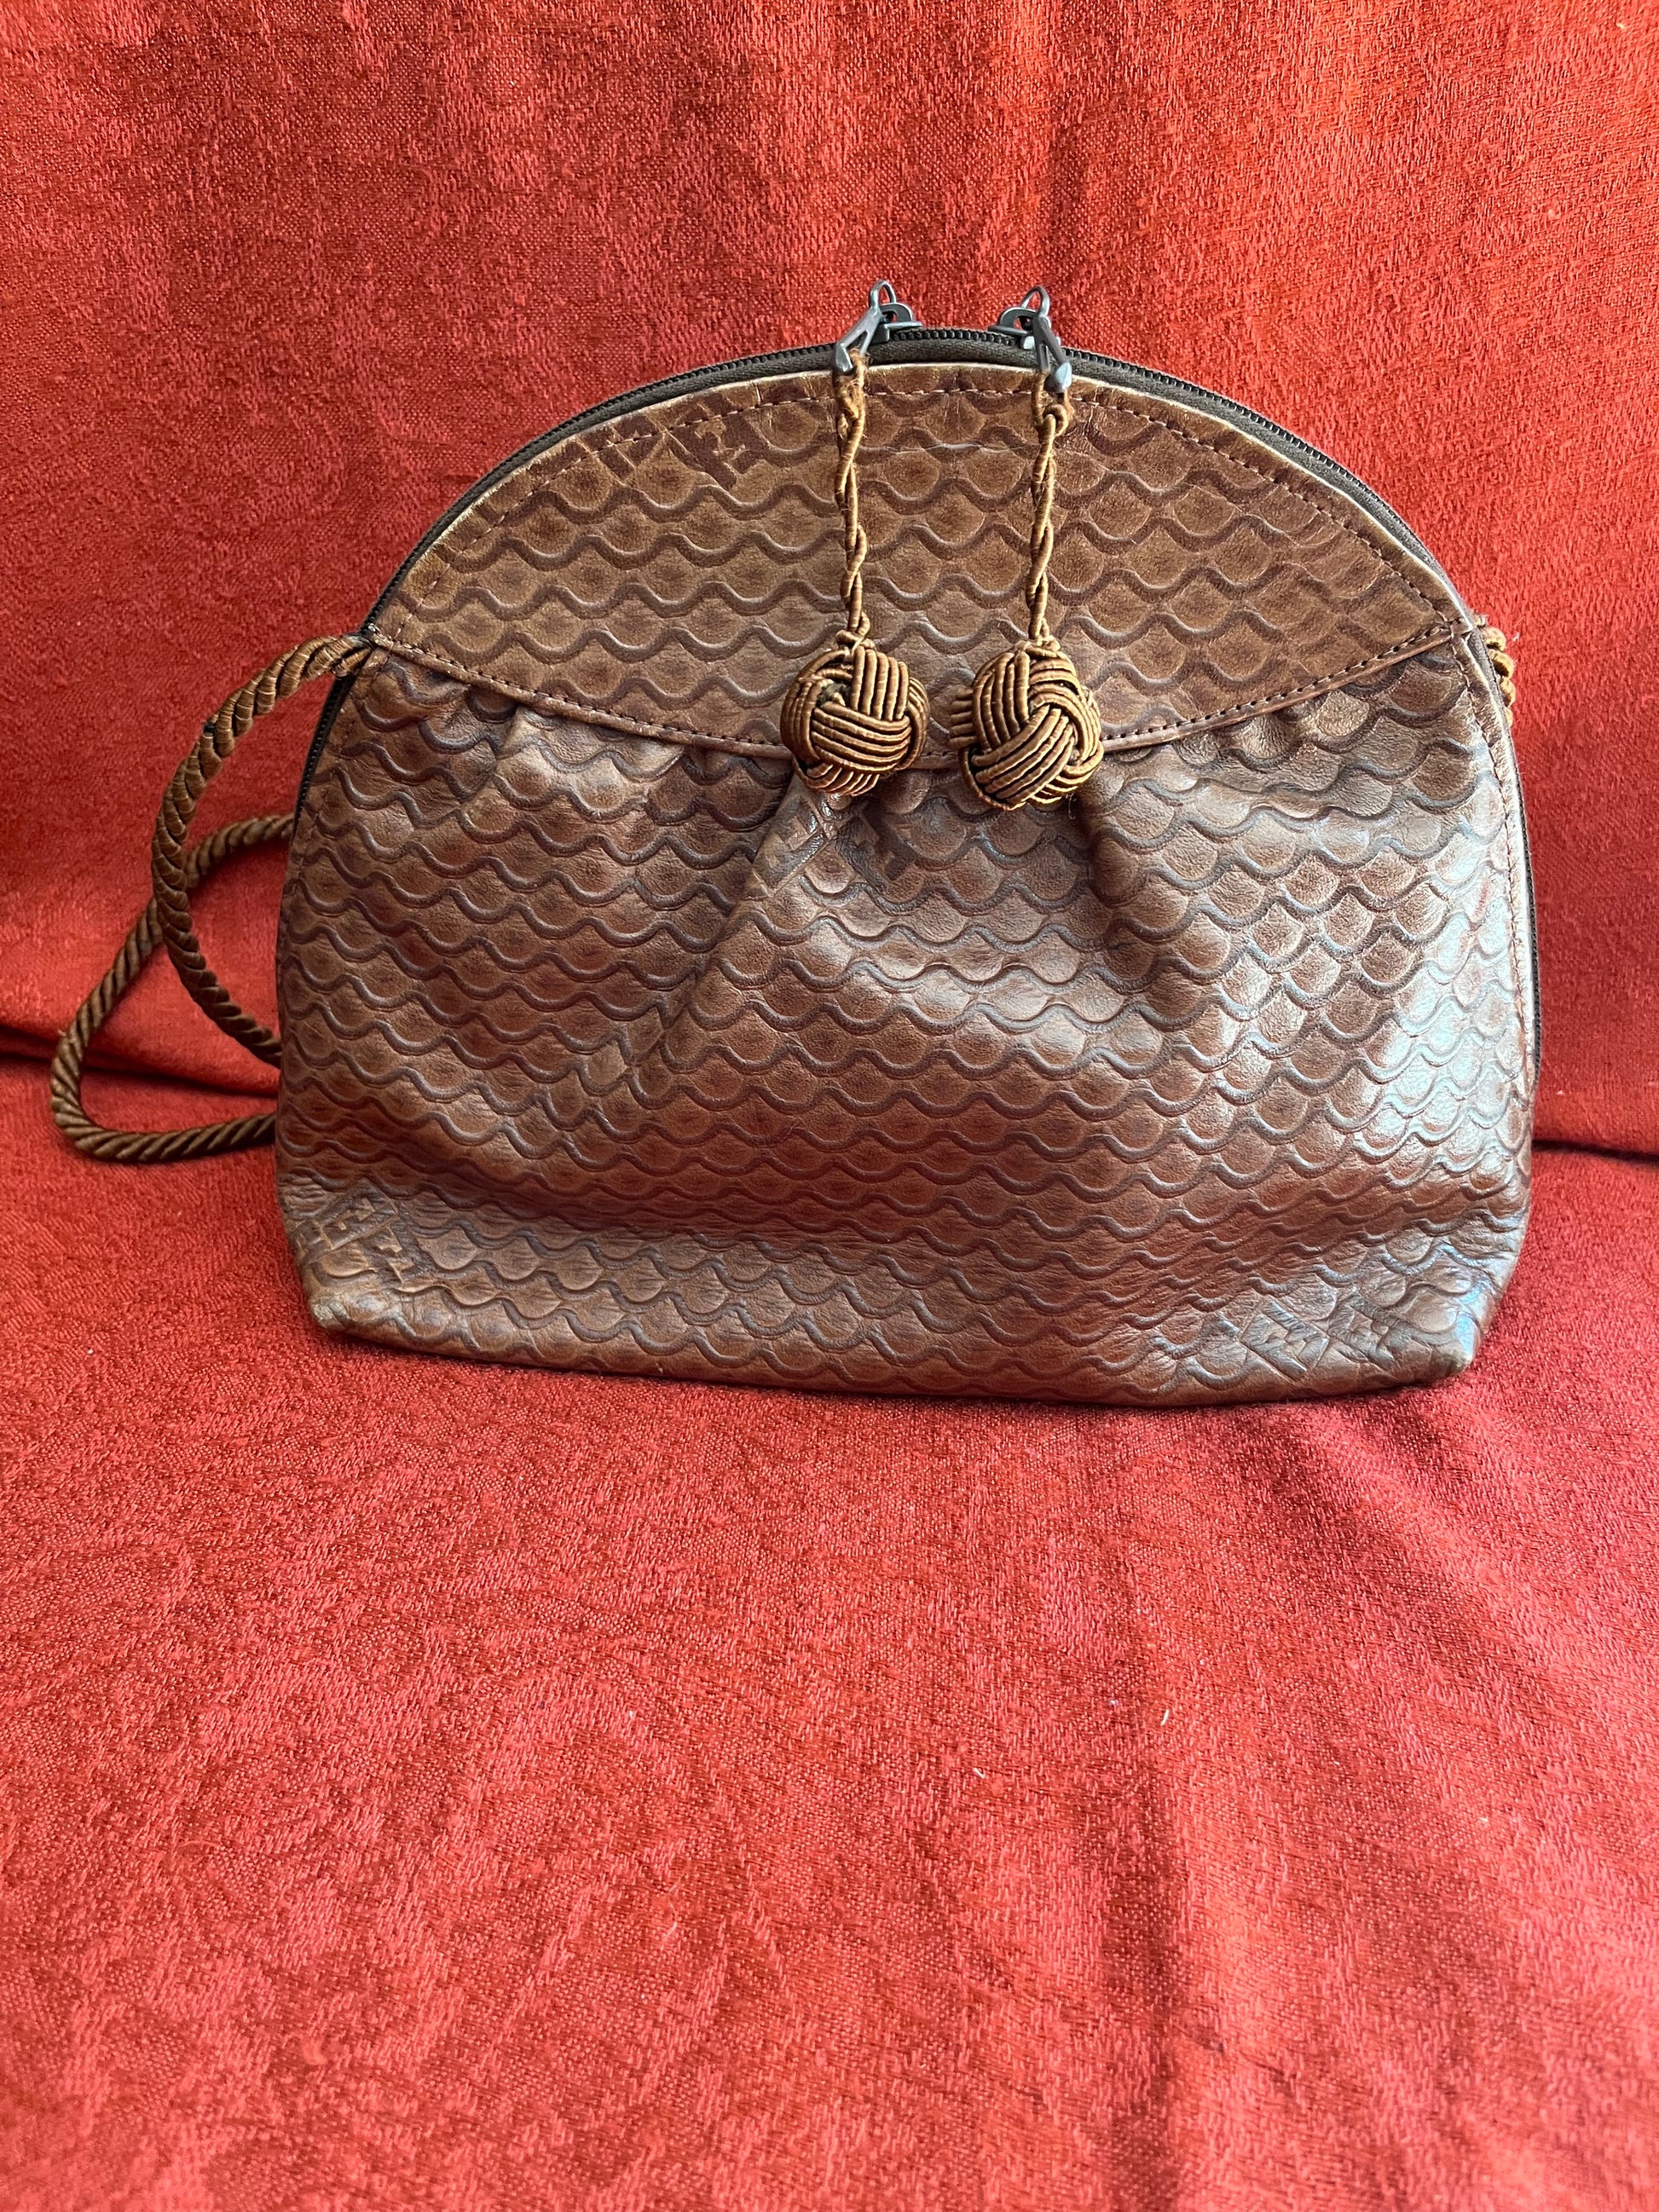 Fendi Brown Leather Crossbody Bag